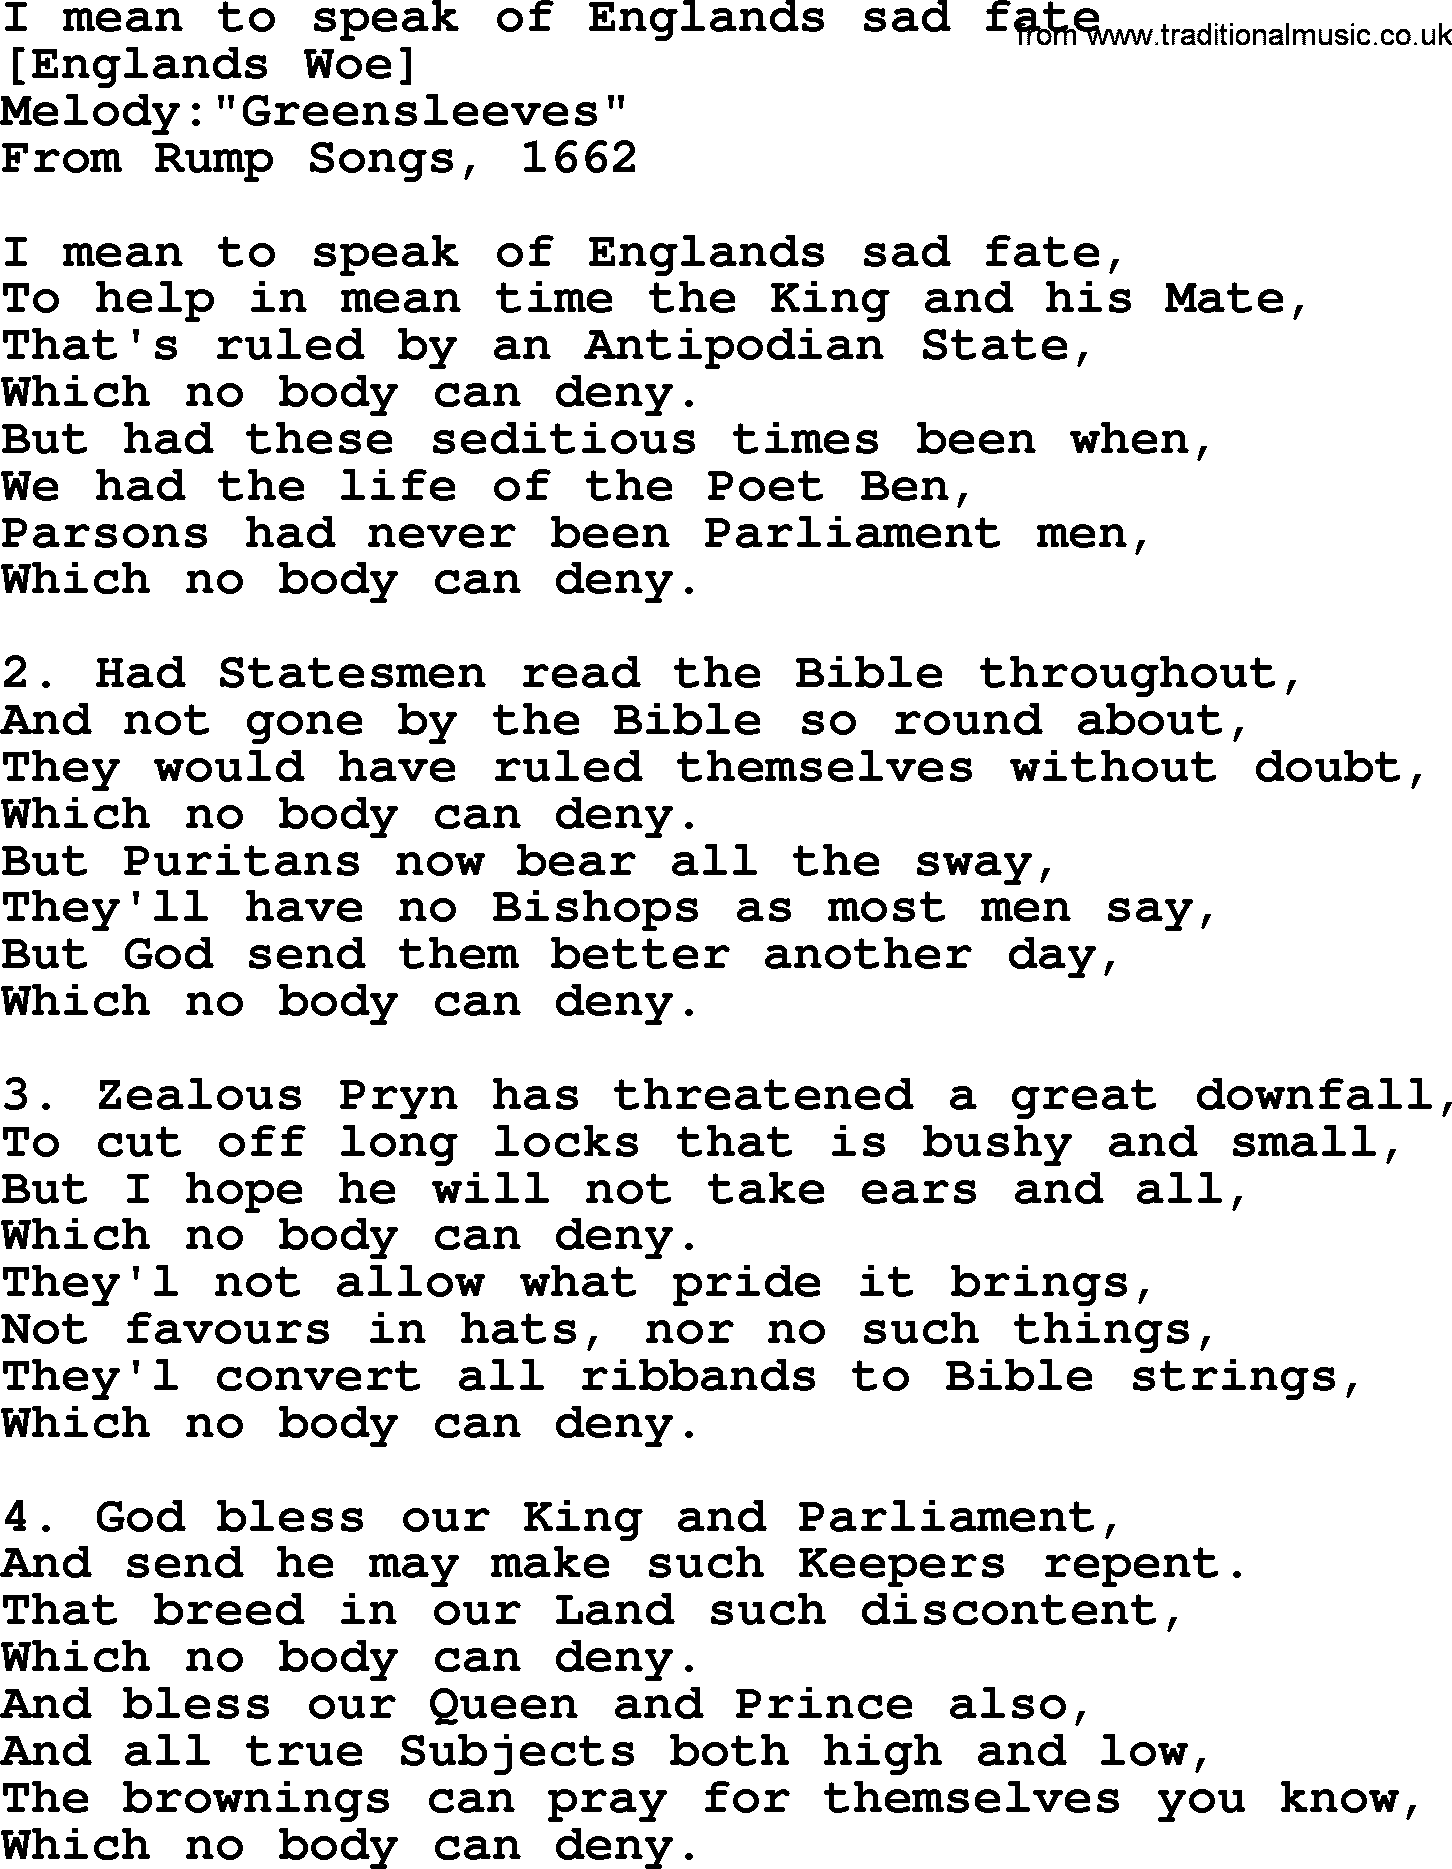 Old English Song: I Mean To Speak Of Englands Sad Fate lyrics